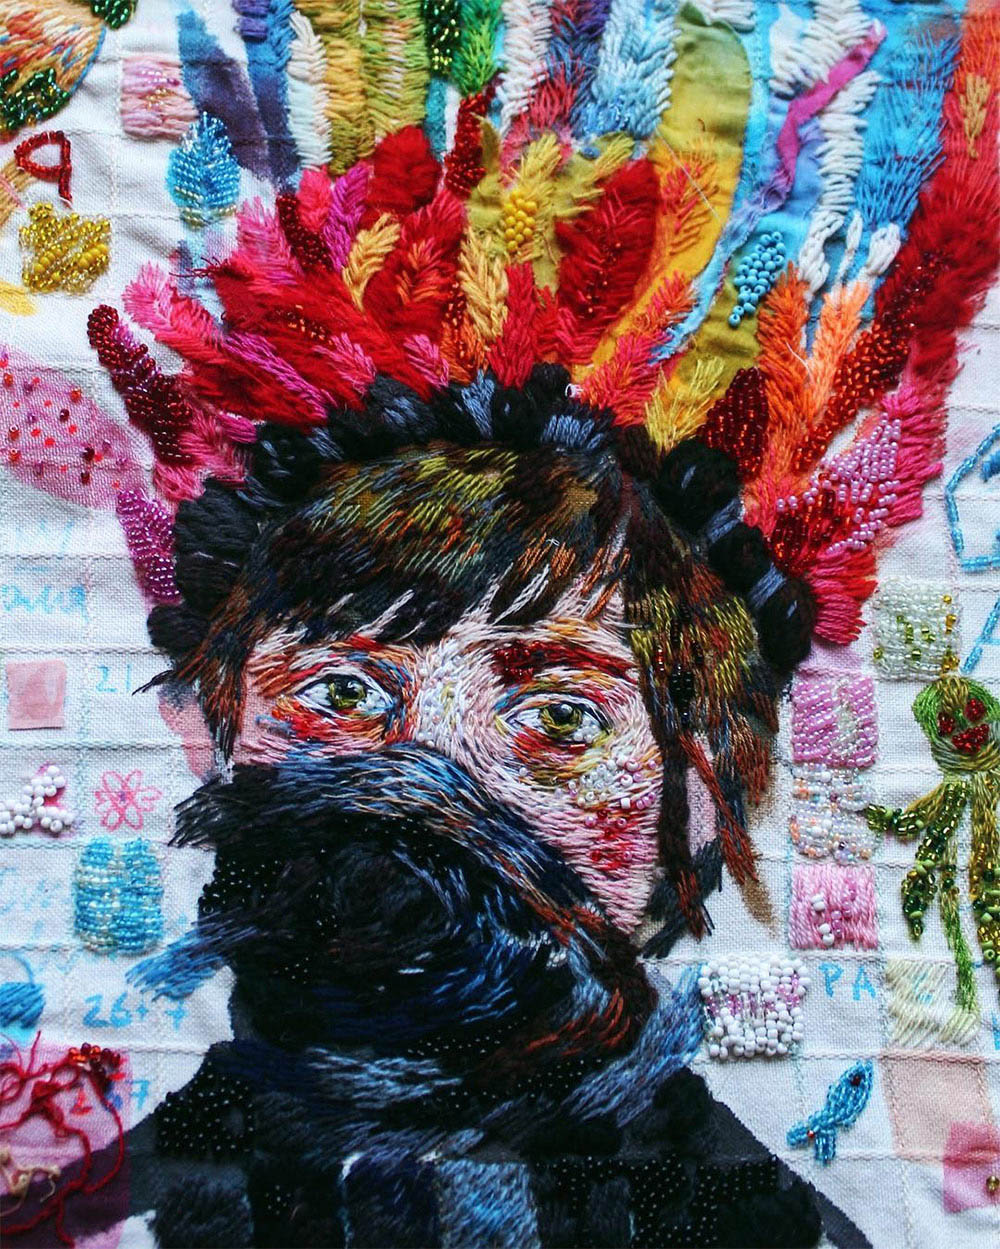 headgear embroidery art lisa smirnova